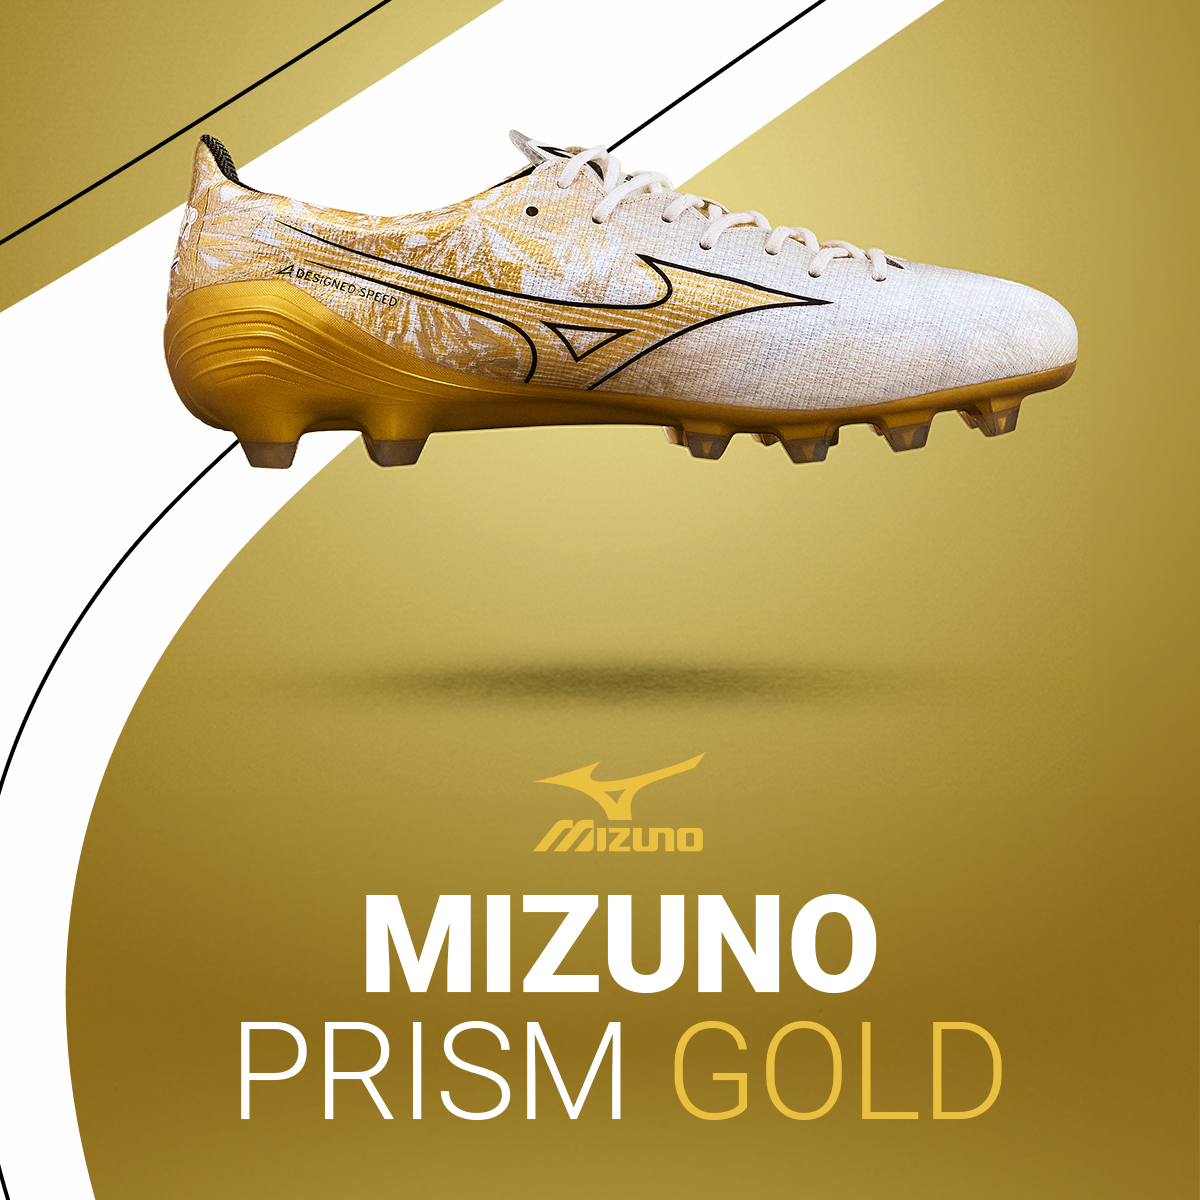 Mizuno Prism Gold